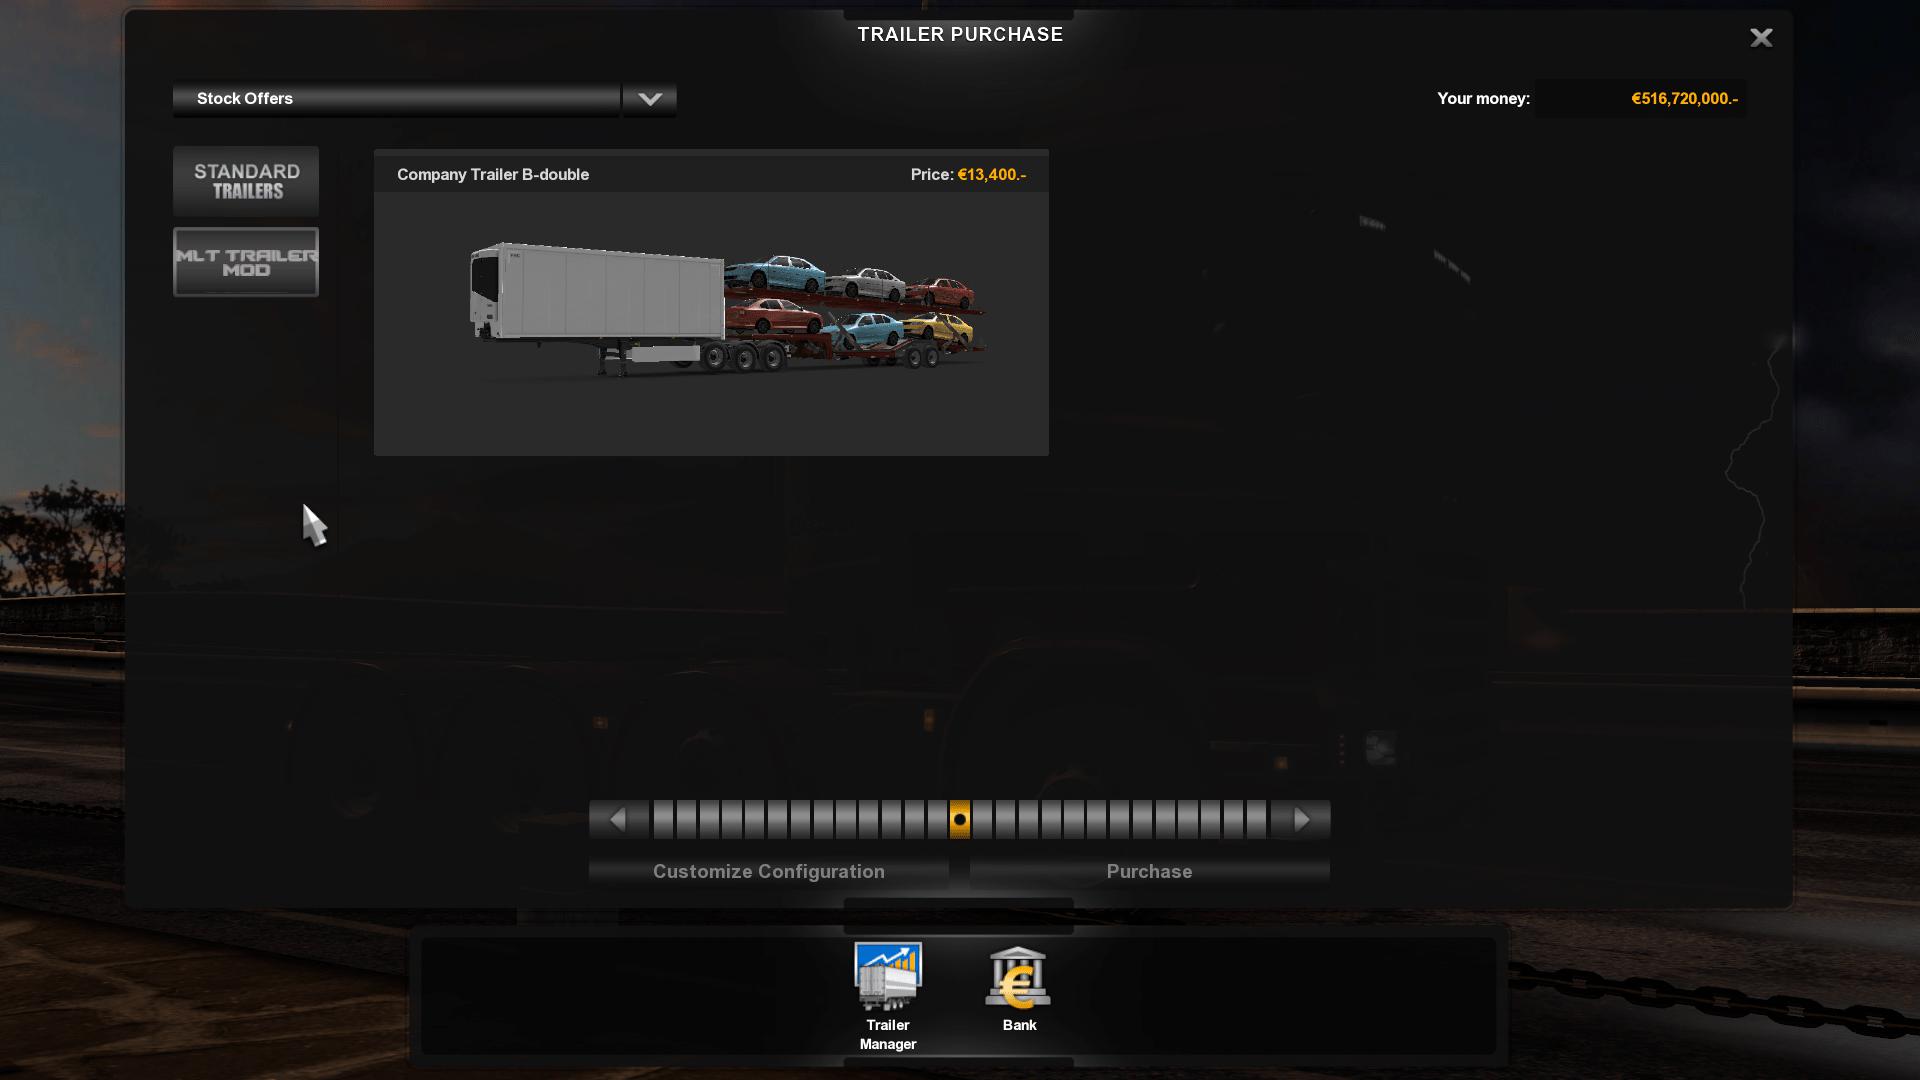 Car Transporter Mod For Multiplayer v1.0